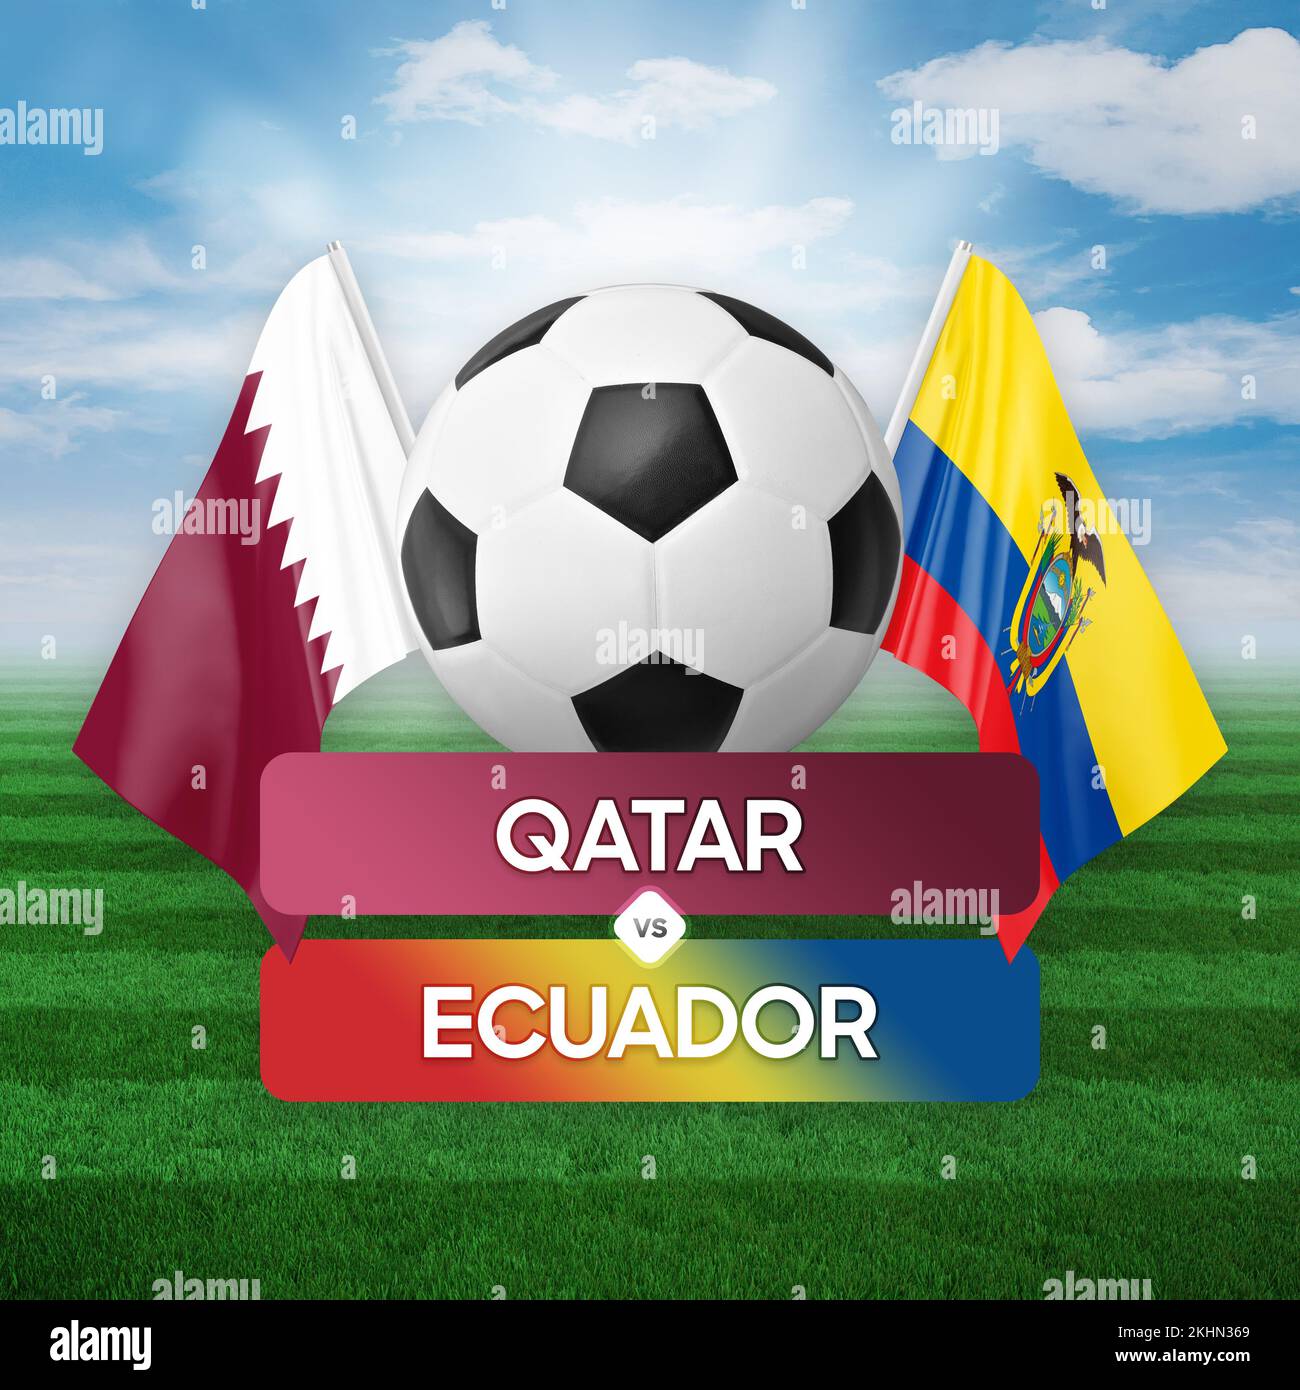 Qatar vs Ecuador national teams soccer football match competition concept. Stock Photo